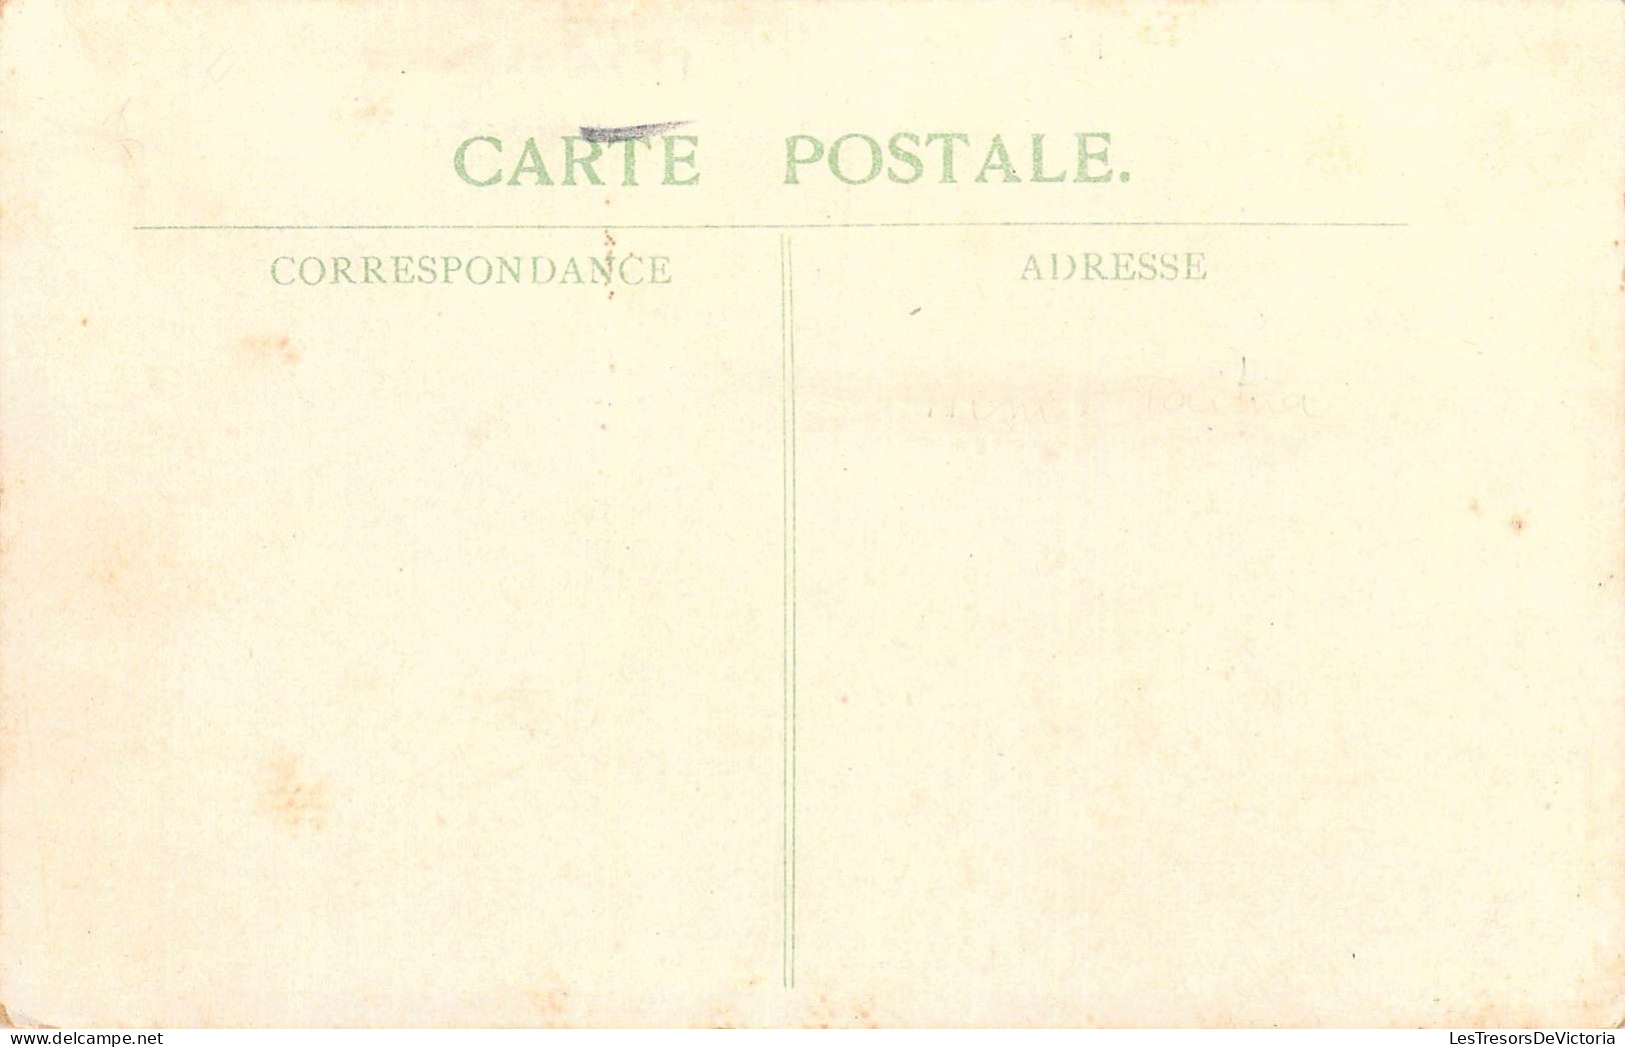 POLYNESIE FRANCAISE - TAHITI - Prince HINOI A POMARE - Bananier - Cocotier - Carte Postale Ancienne - Polynésie Française